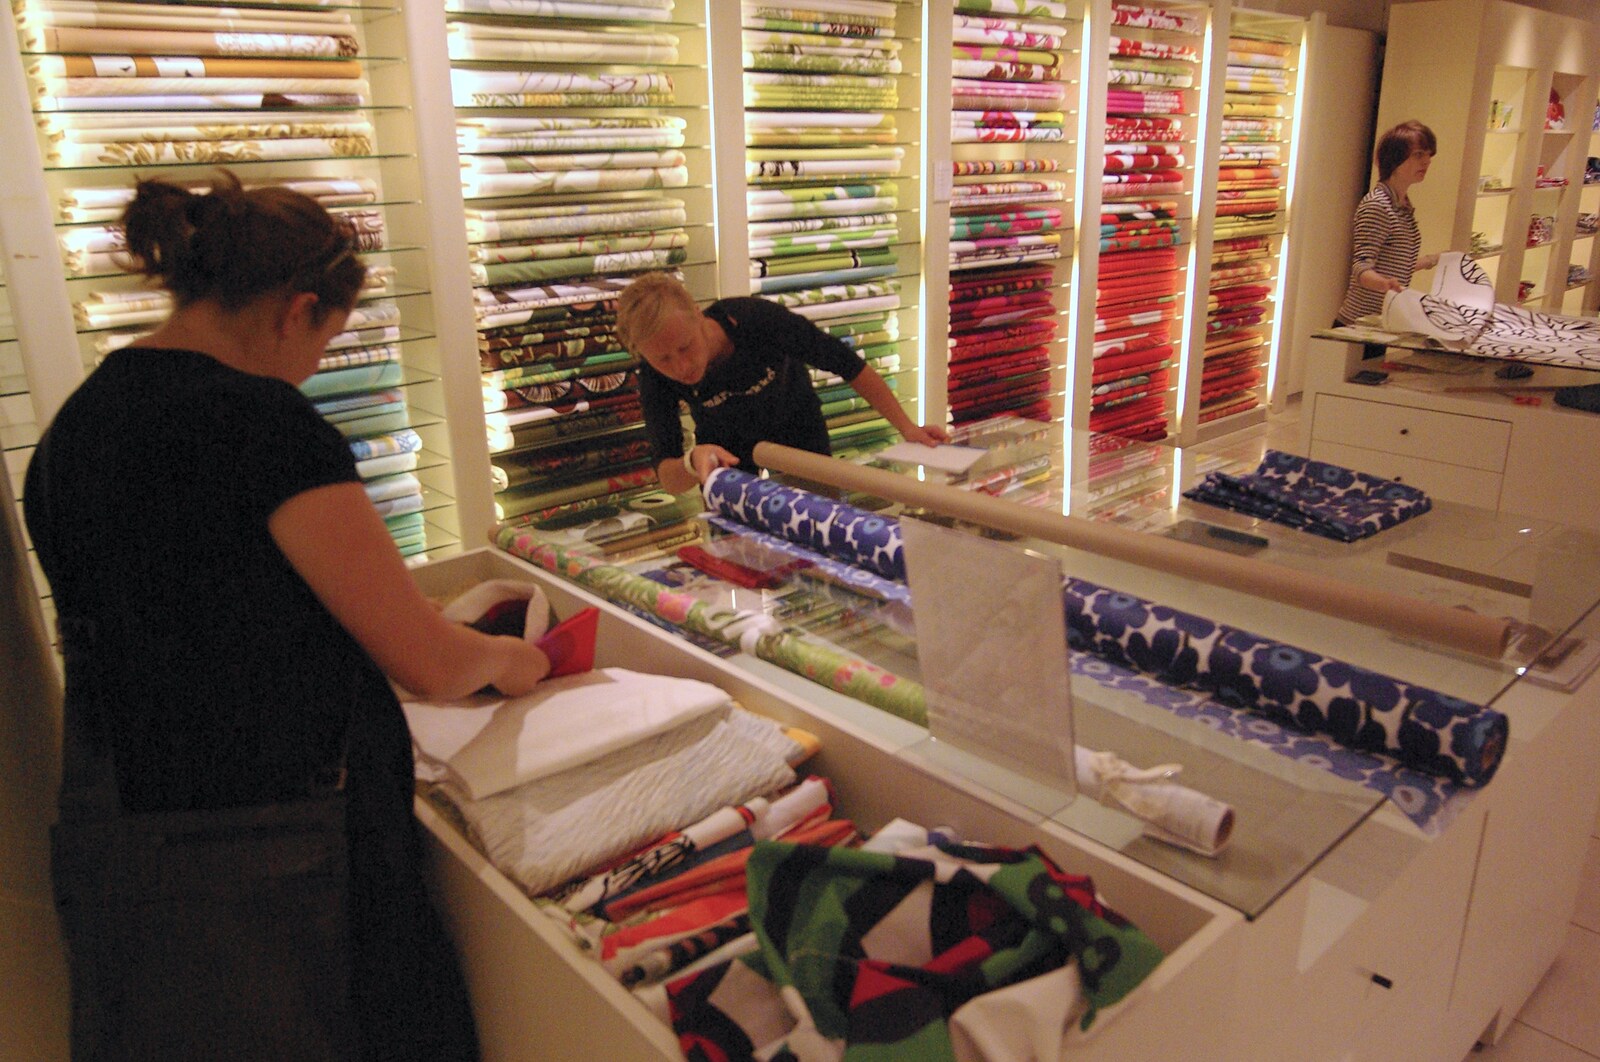 Genesis in Concert, and Suomenlinna, Helsinki, Finland - 11th June 2007: Isobel looks at fabric in the Marimekko shop